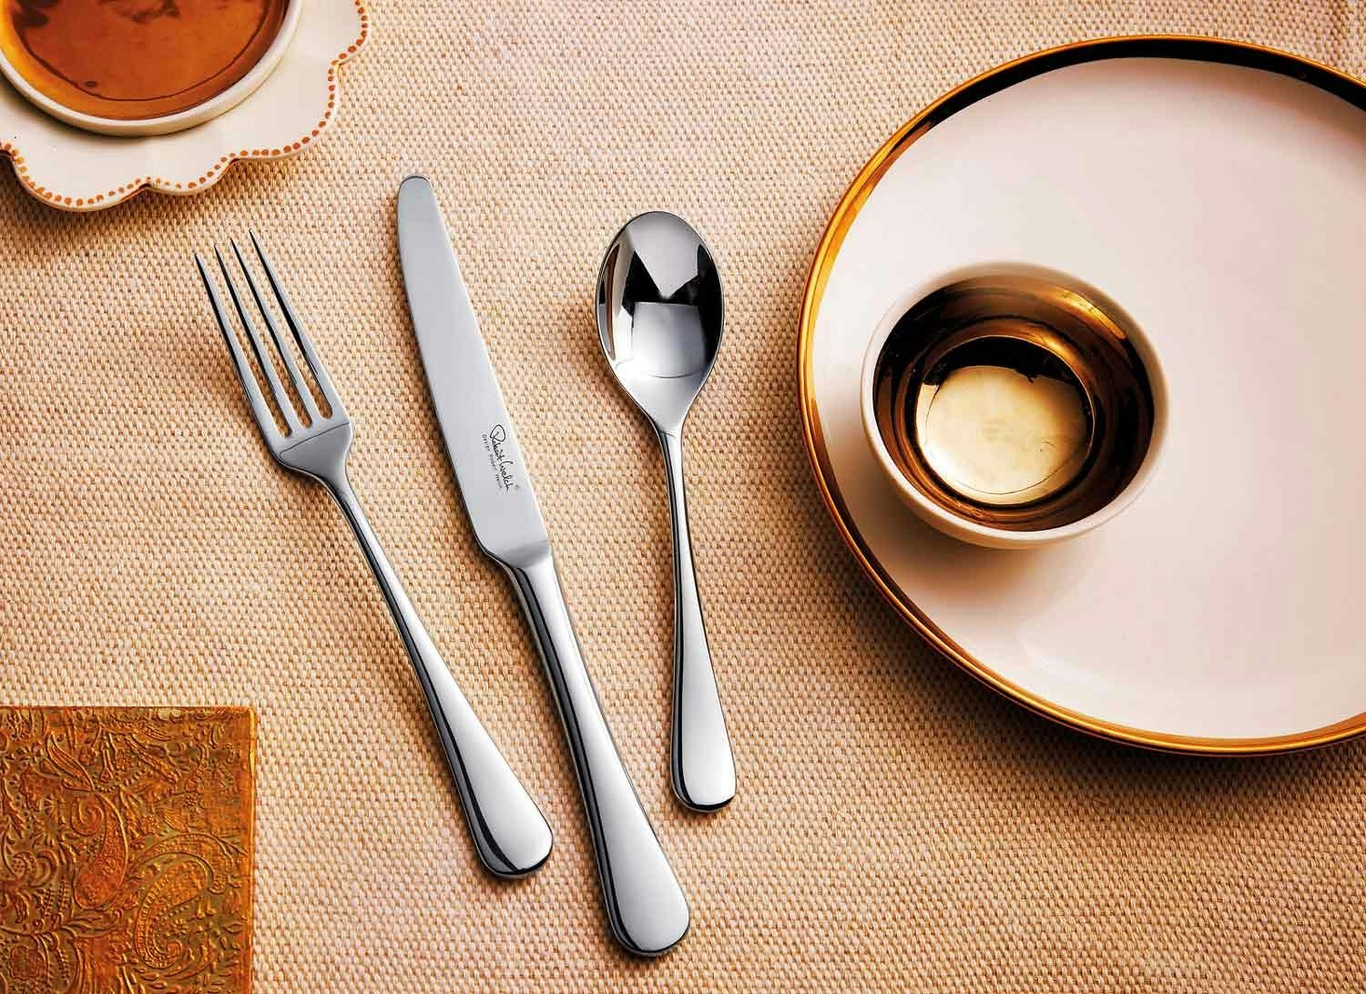 https://royaldesign.com/image/2/robert-welch-radford-cutlery-set-42-piece-5?w=800&quality=80